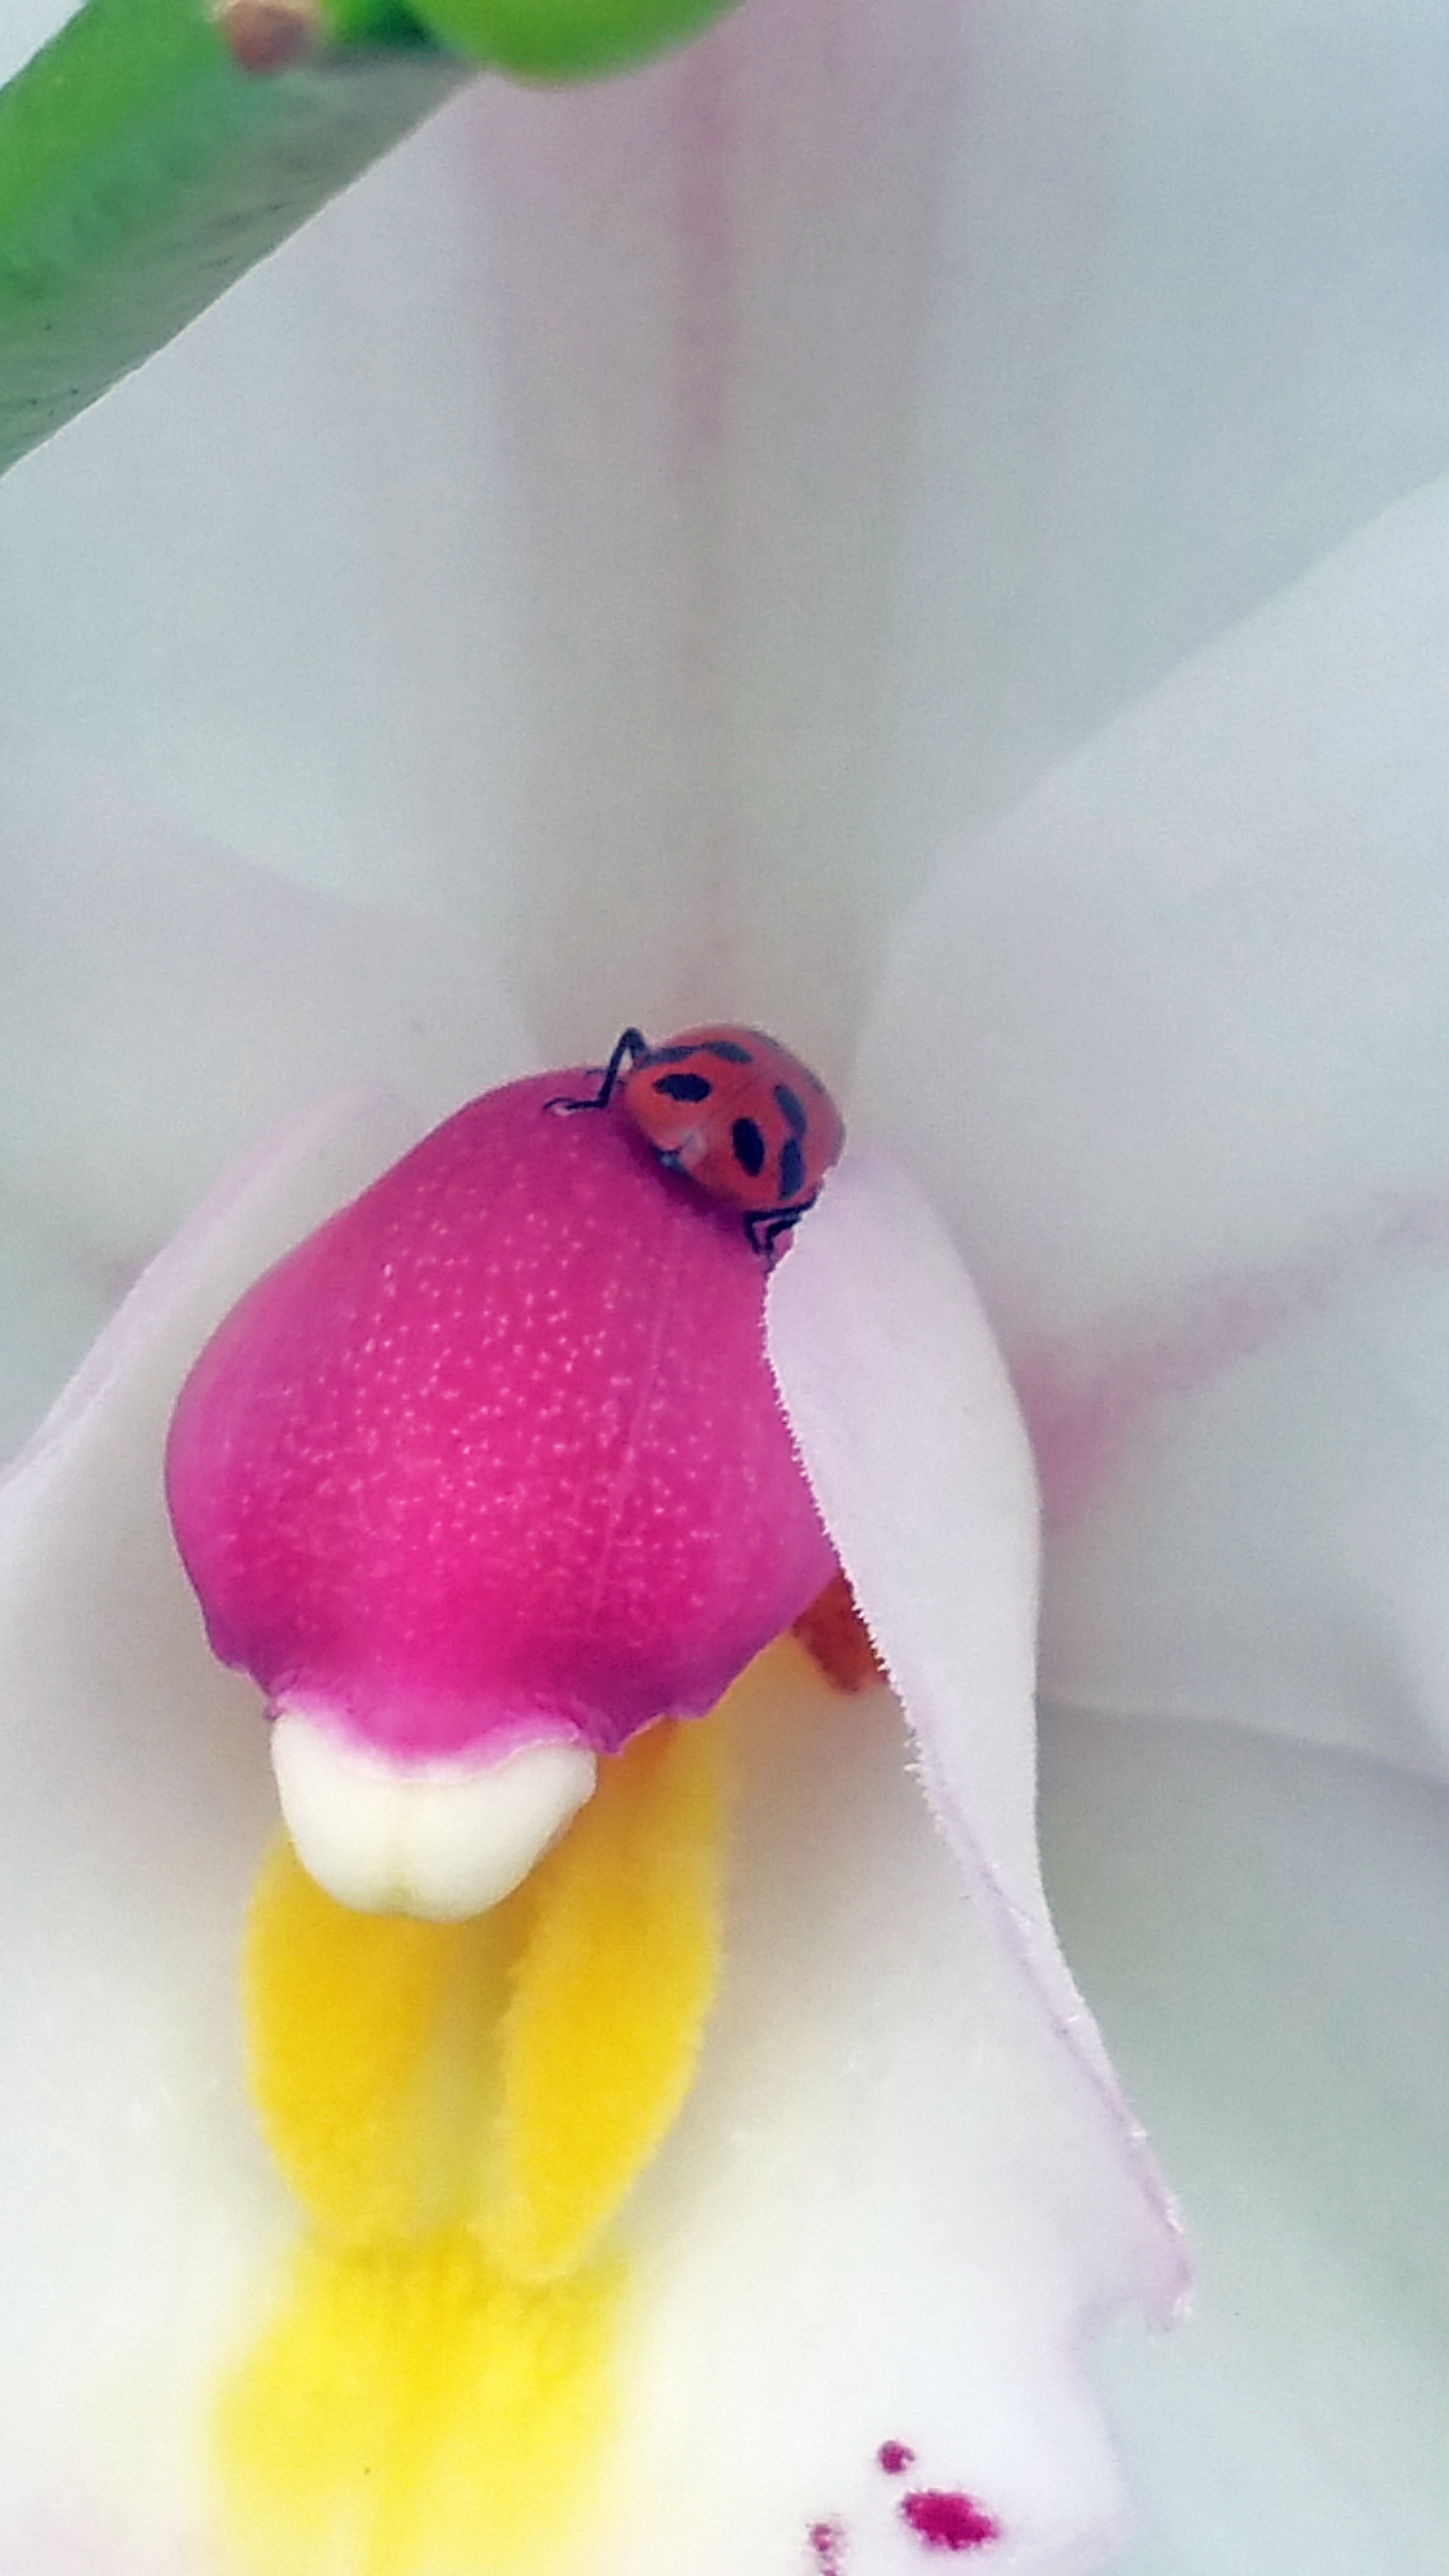 good night image orchids ladybugs